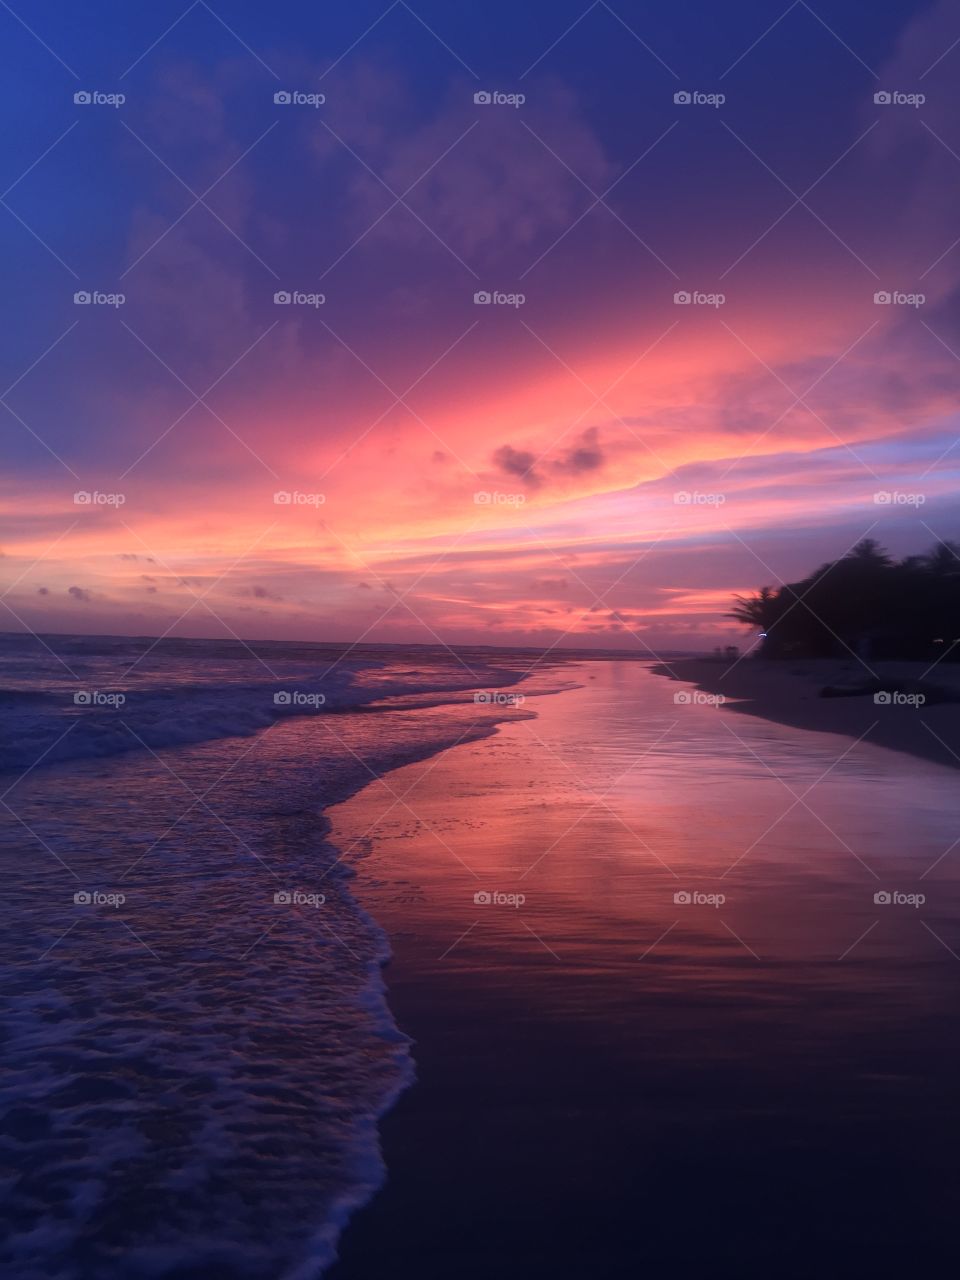 The greatest pink sunset in my life! 💗Sri Lanka lands. Creator- God